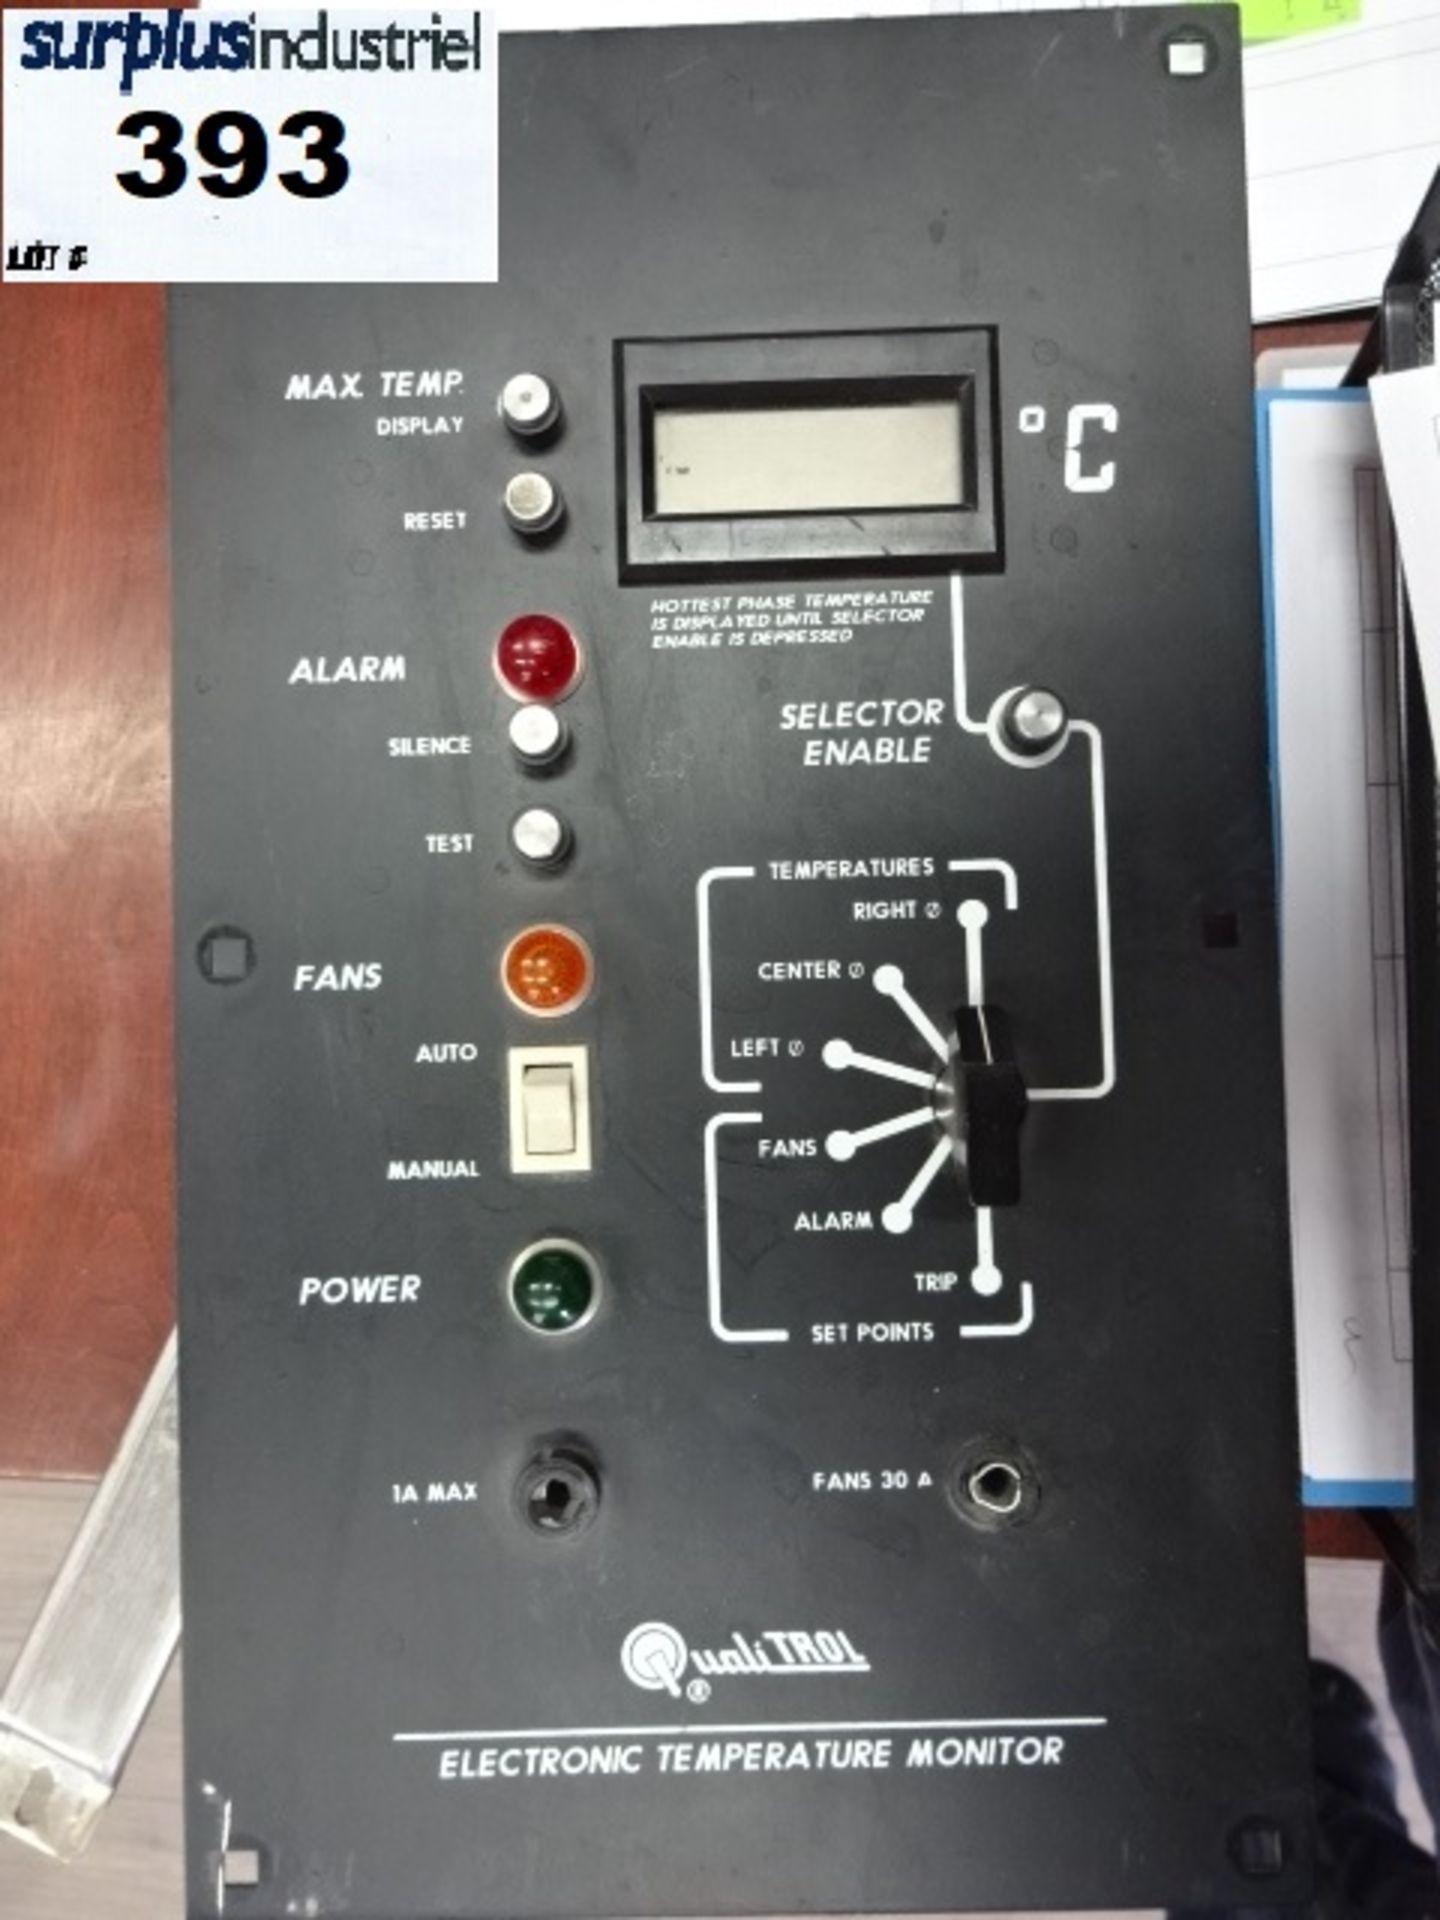 Qualitrol-108-009-01-Electronic-Temperature-Monitor-120-277-Vac